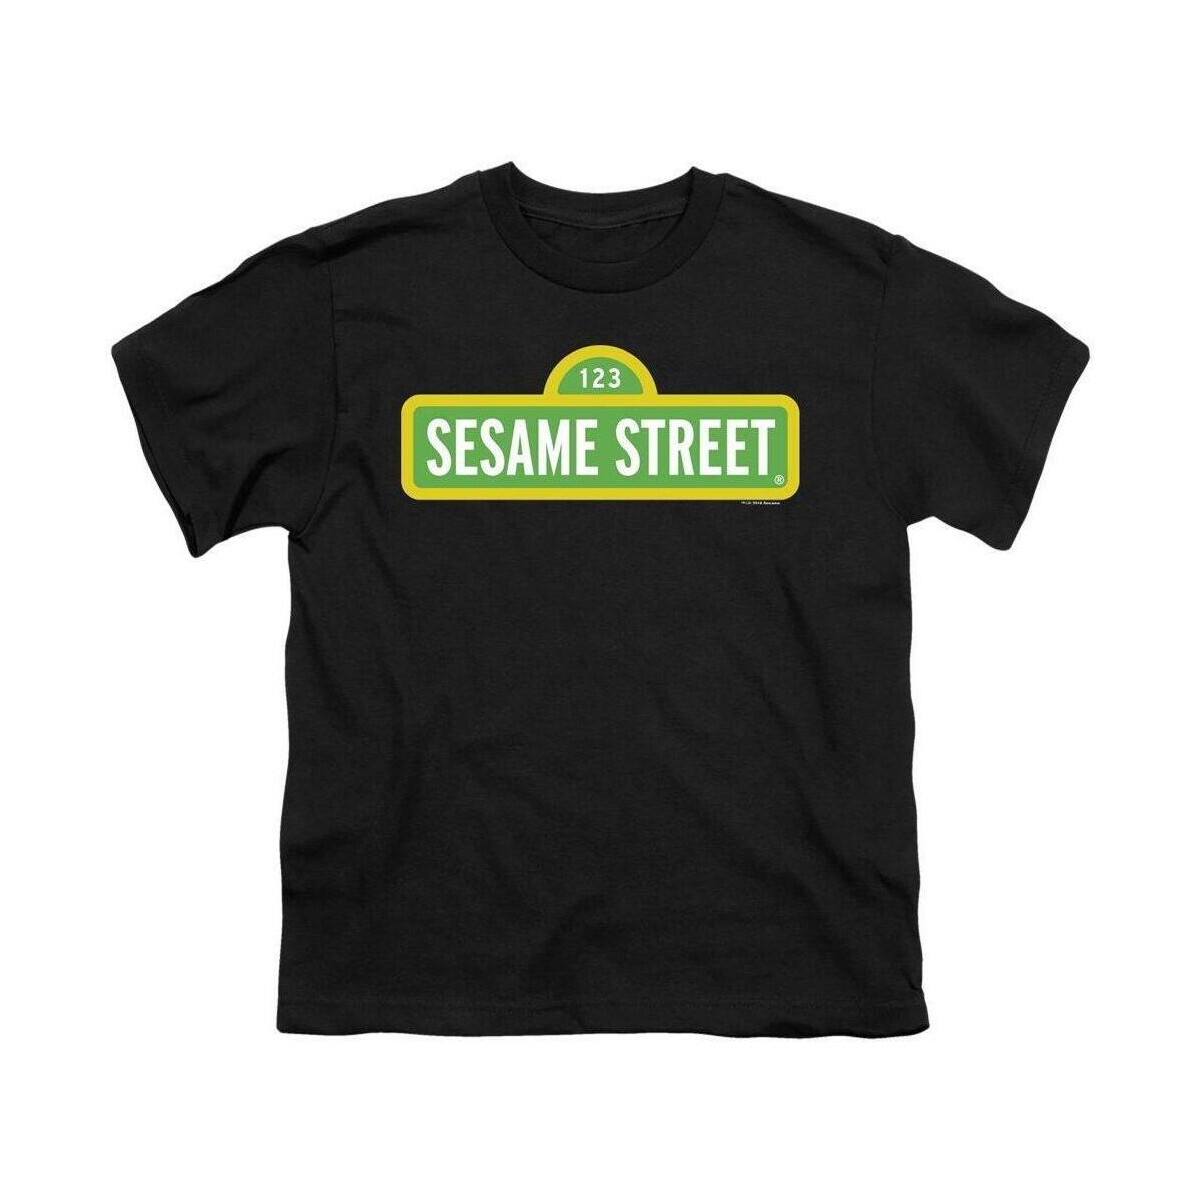 textil Niños Camisetas manga corta Sesame Street TV2964 Negro